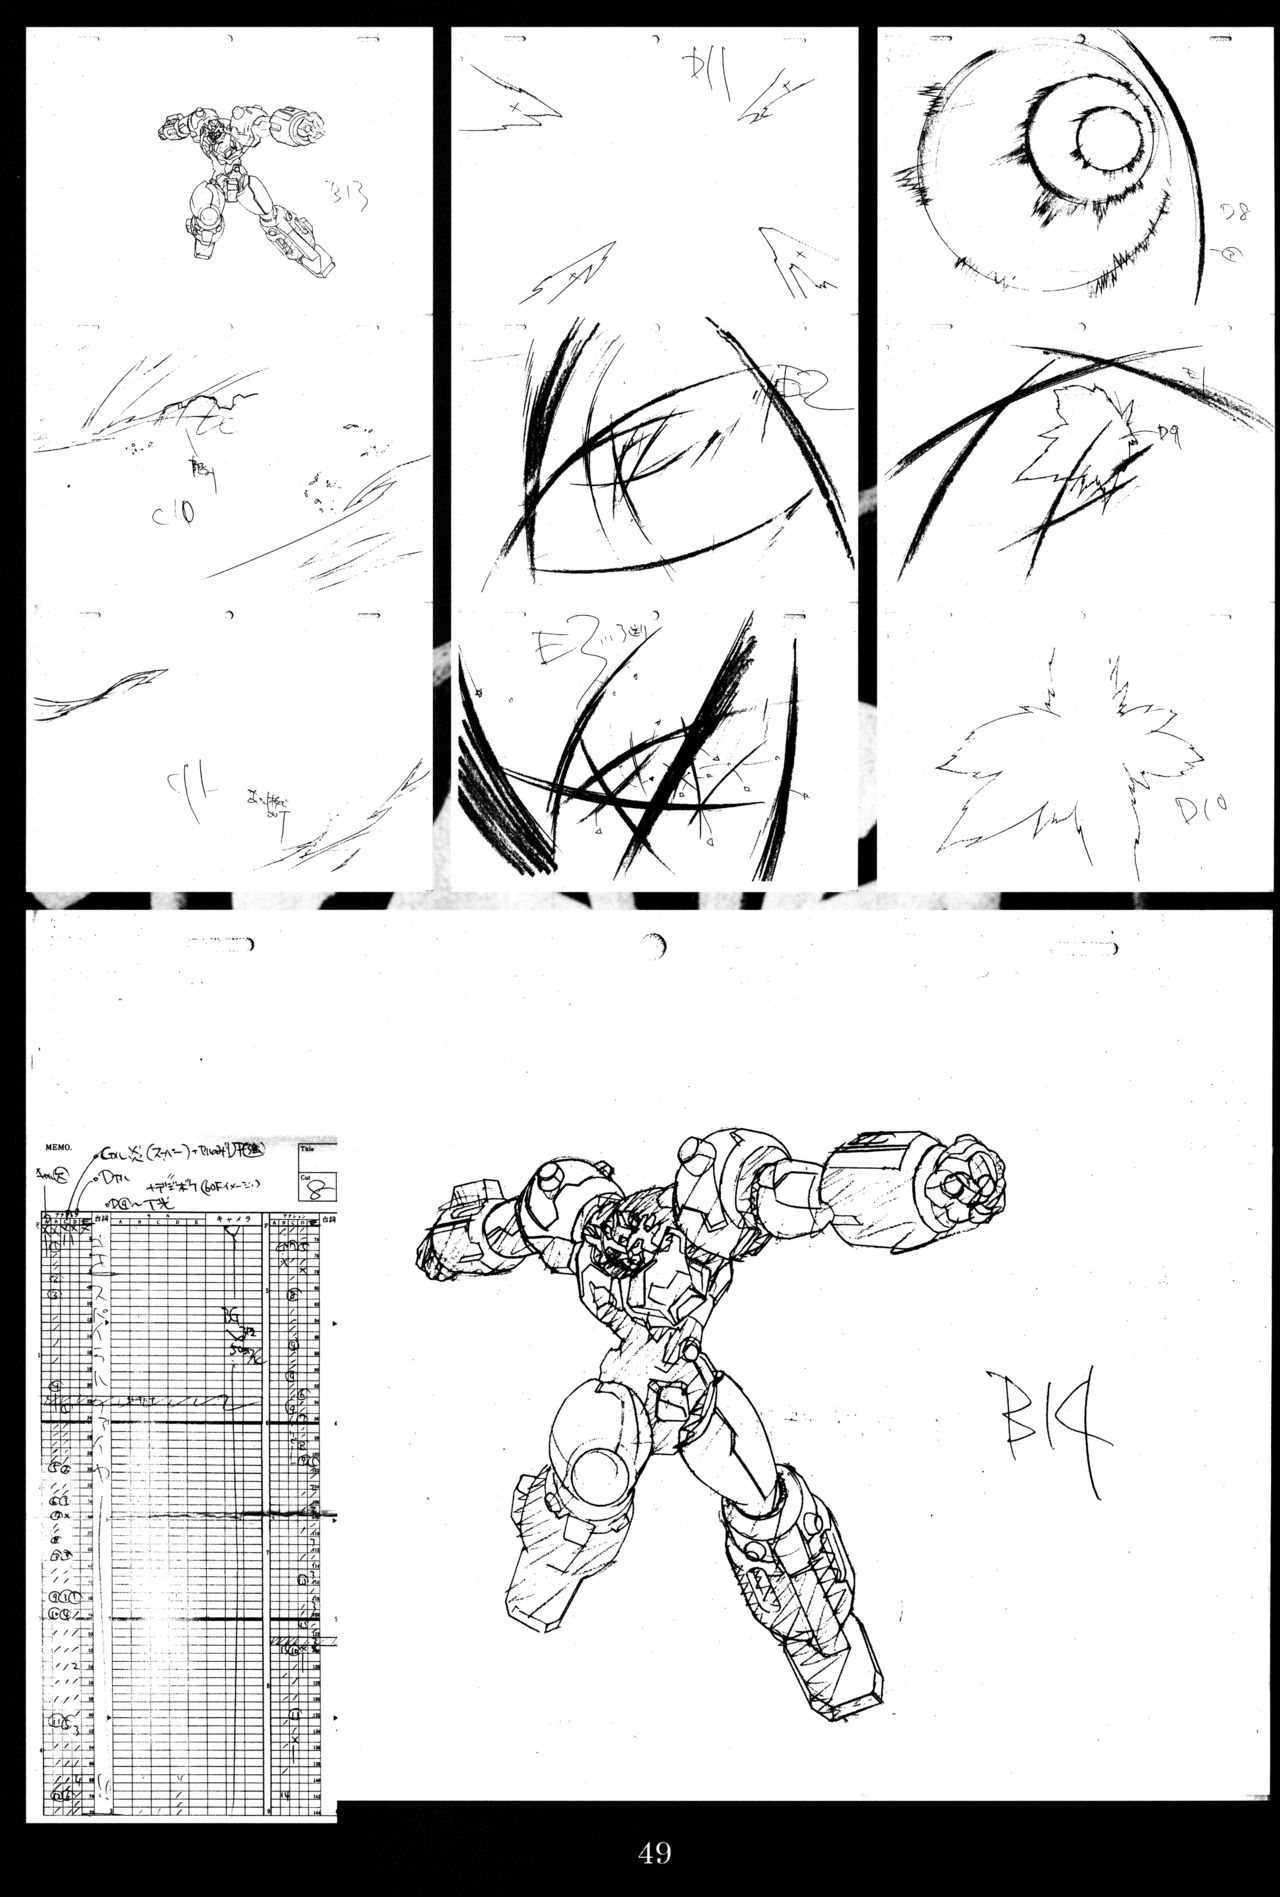 Burning G: Yosuke Kabashima Animator 20th Anniversary Book 47